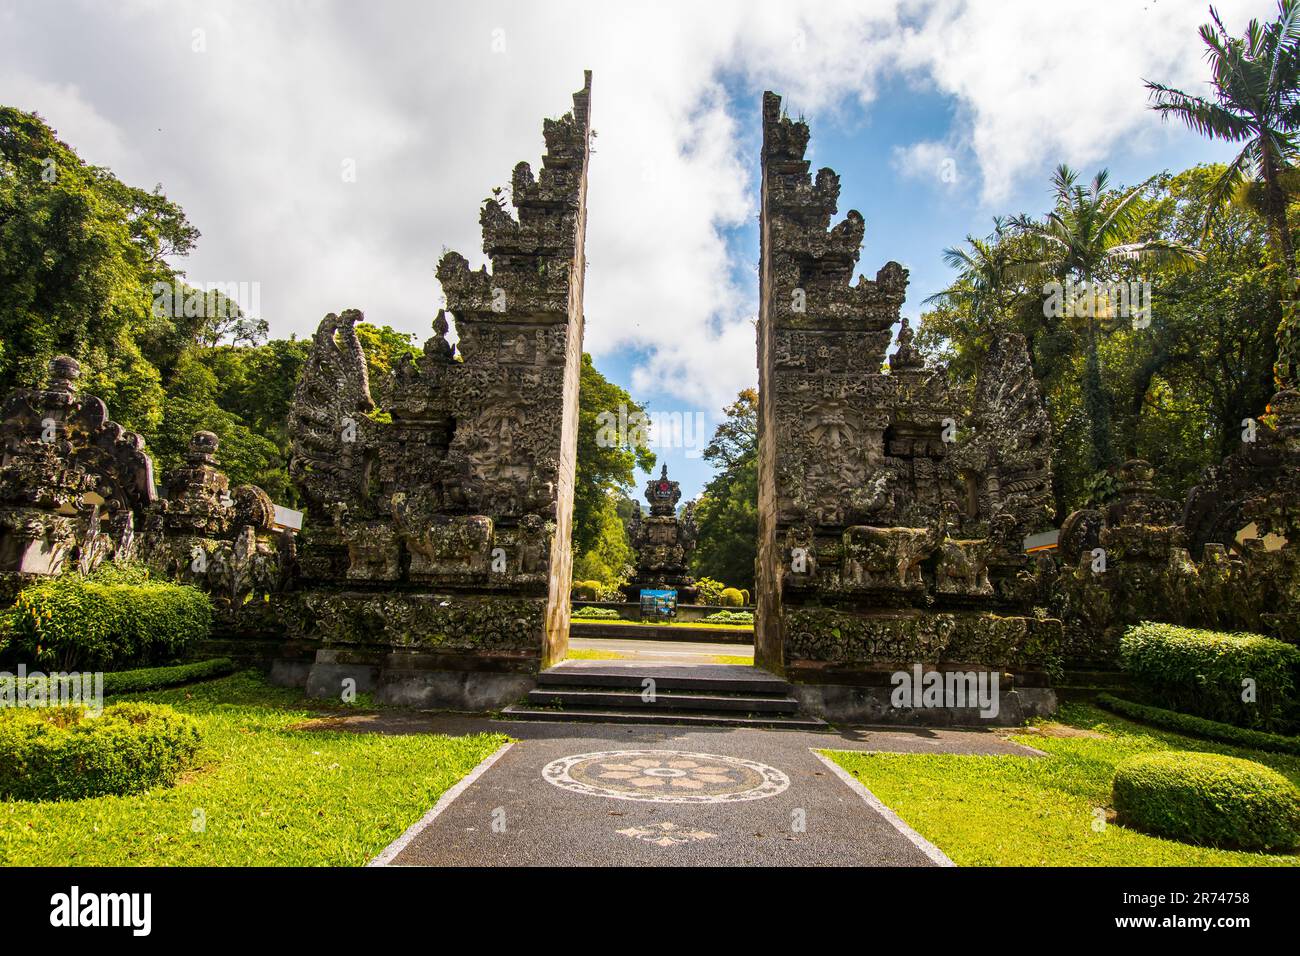 Beatiful Bali Island of Indonesia Stock Photo